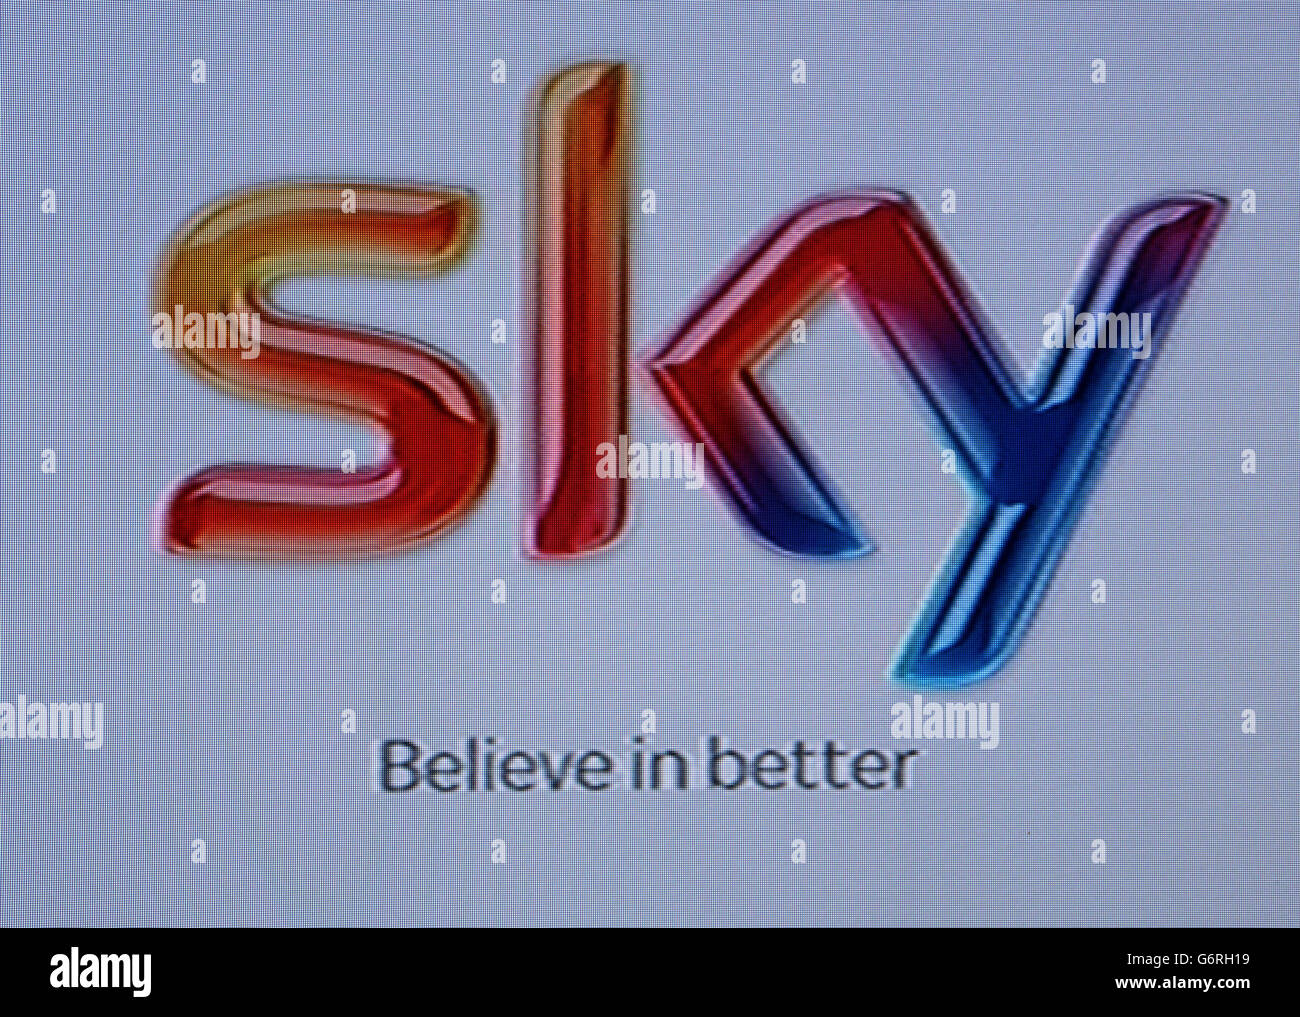 Stock Bild des Sky TV-Logos Stockfotografie - Alamy